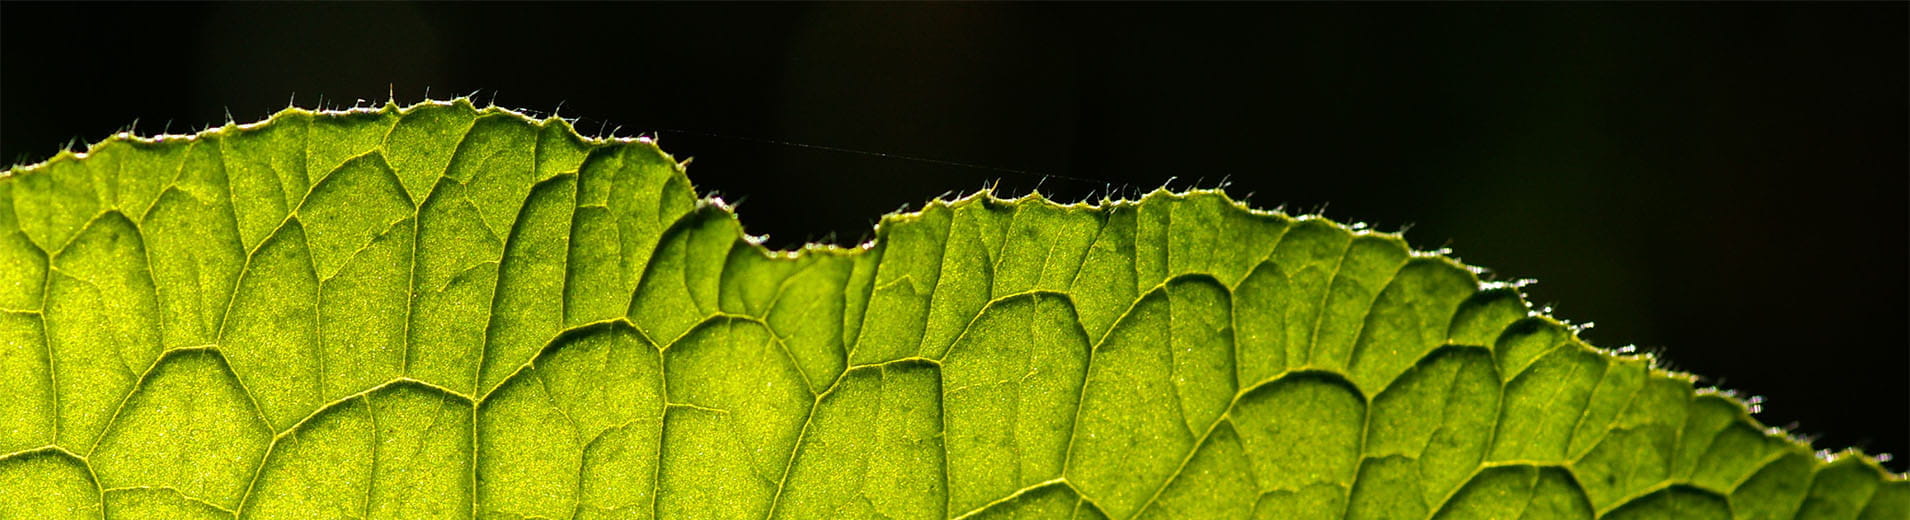 Green_leaf_closeup_S_2555